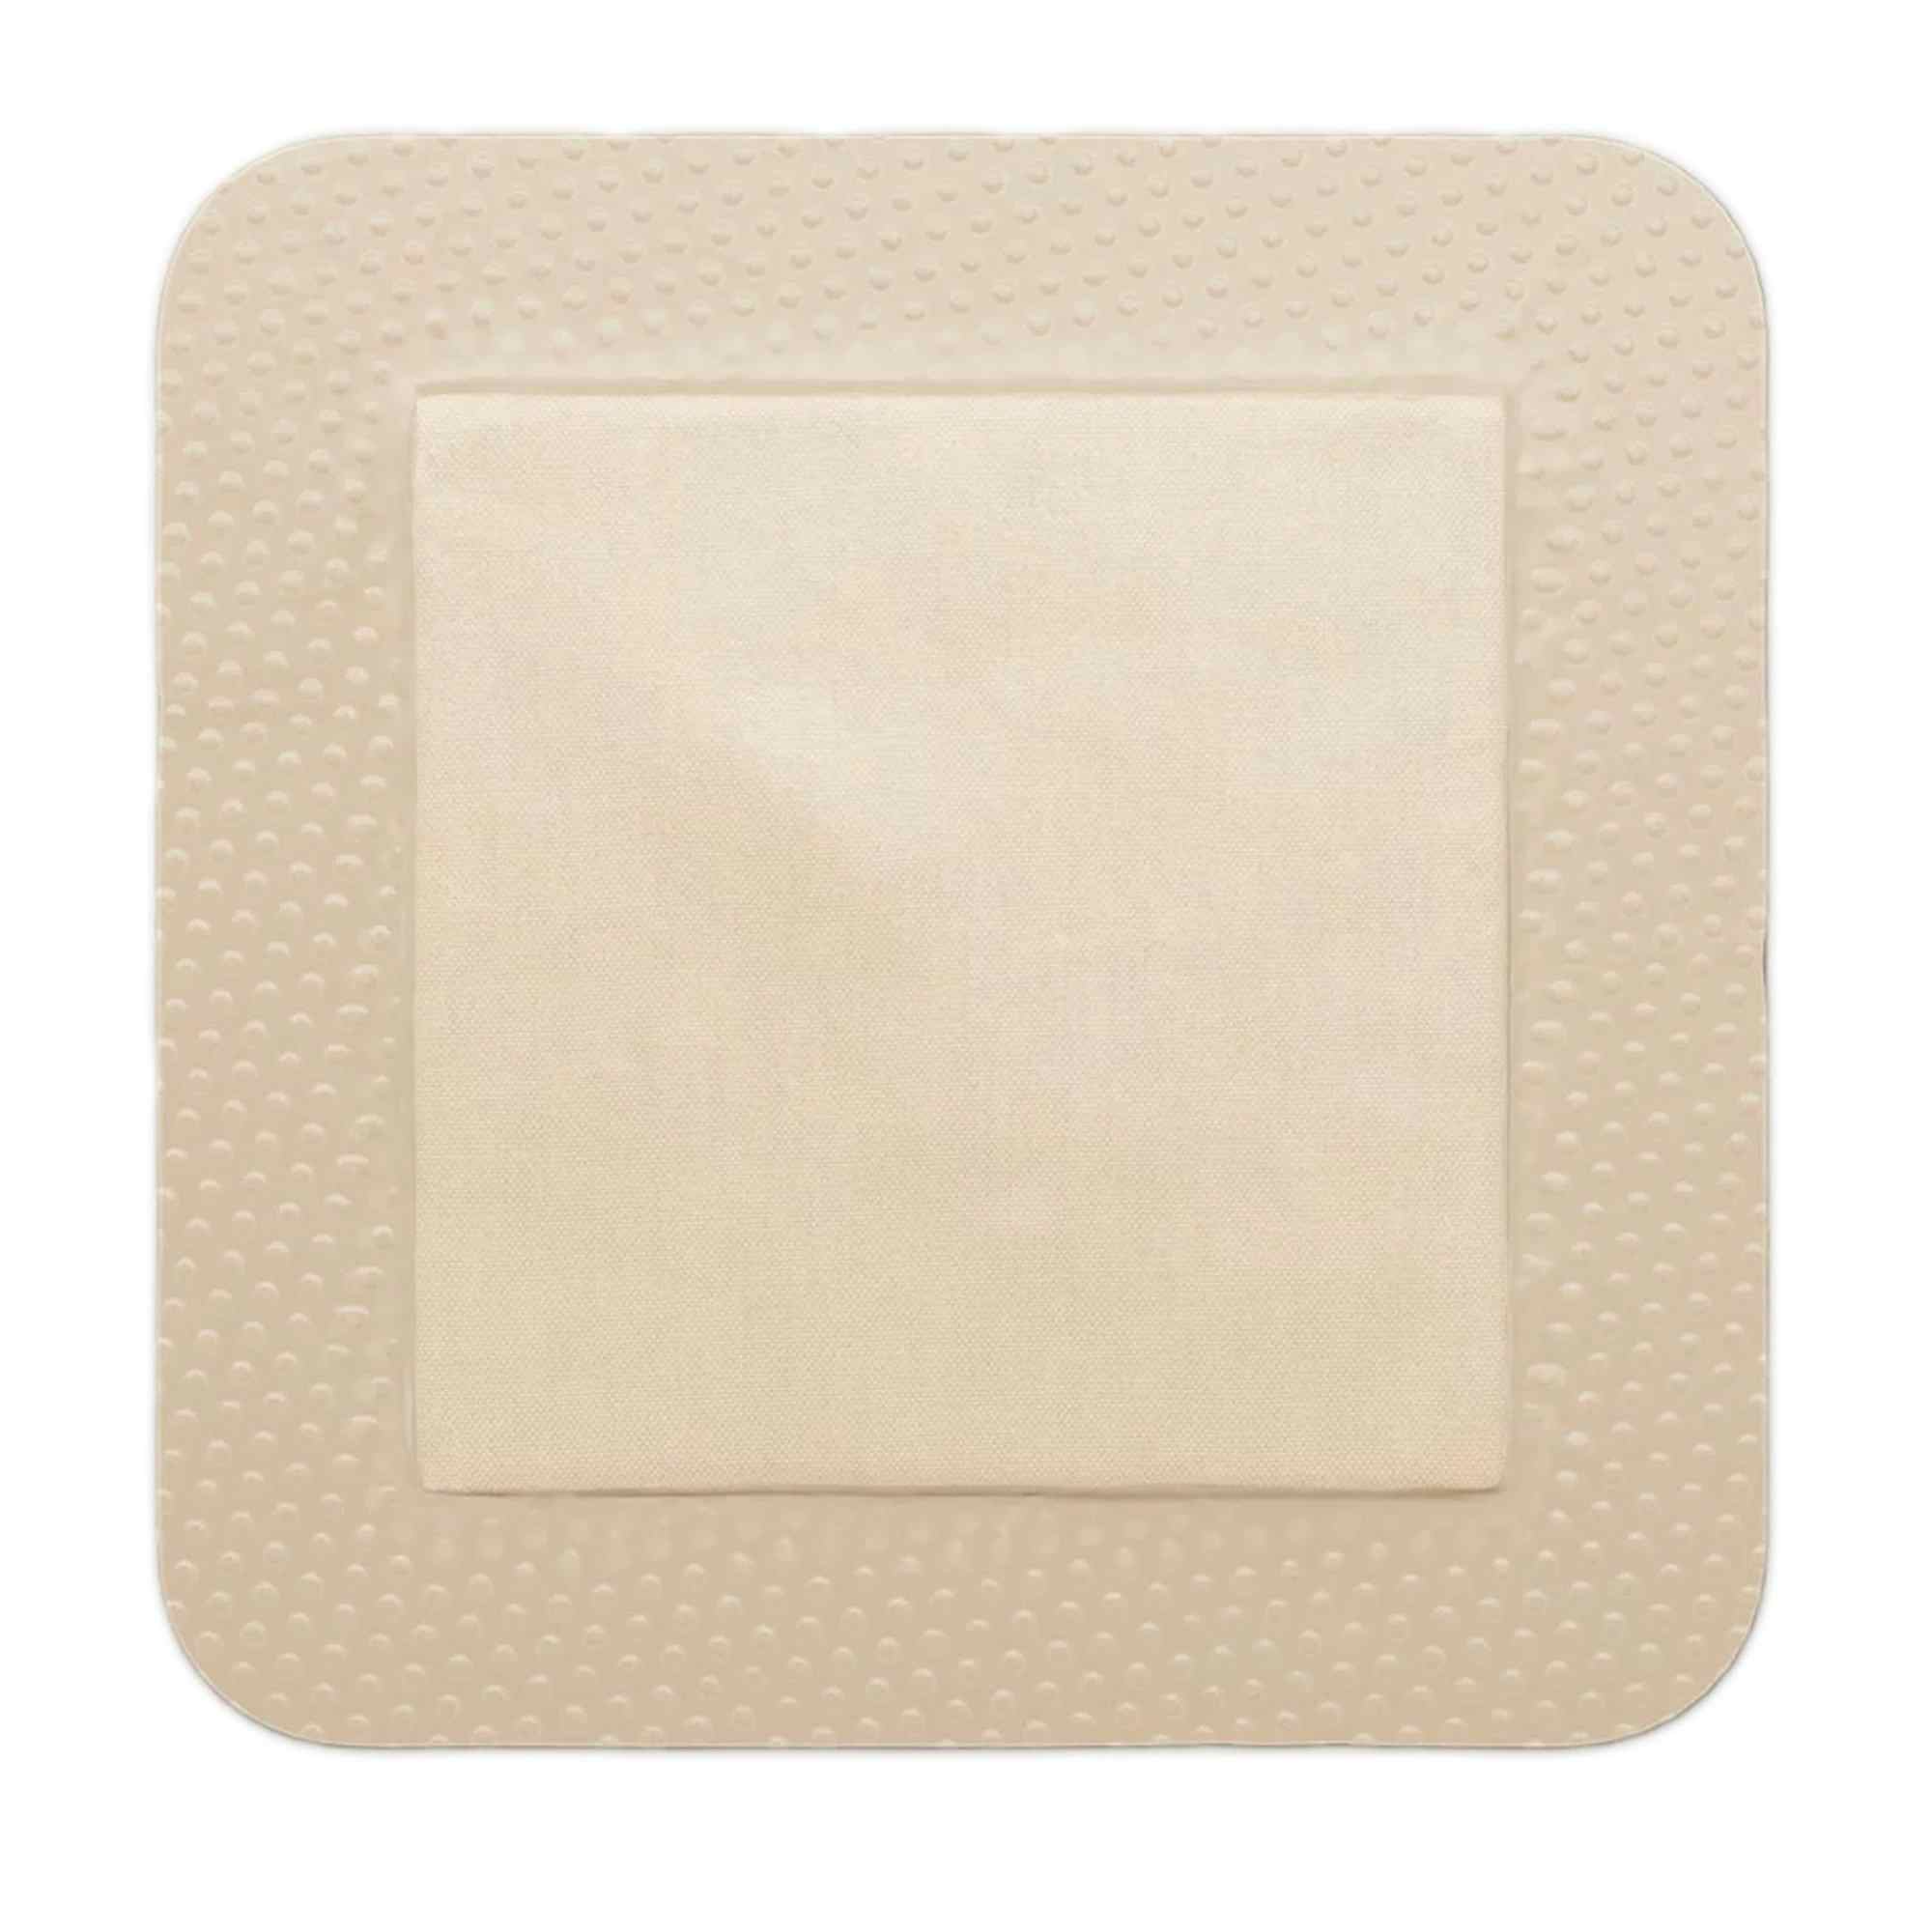 Molnlycke Mepilex Border Lite Silicone Adhesive with Border Thin Silicone Foam Dressing, 2 x 5", 281100, Box of 5